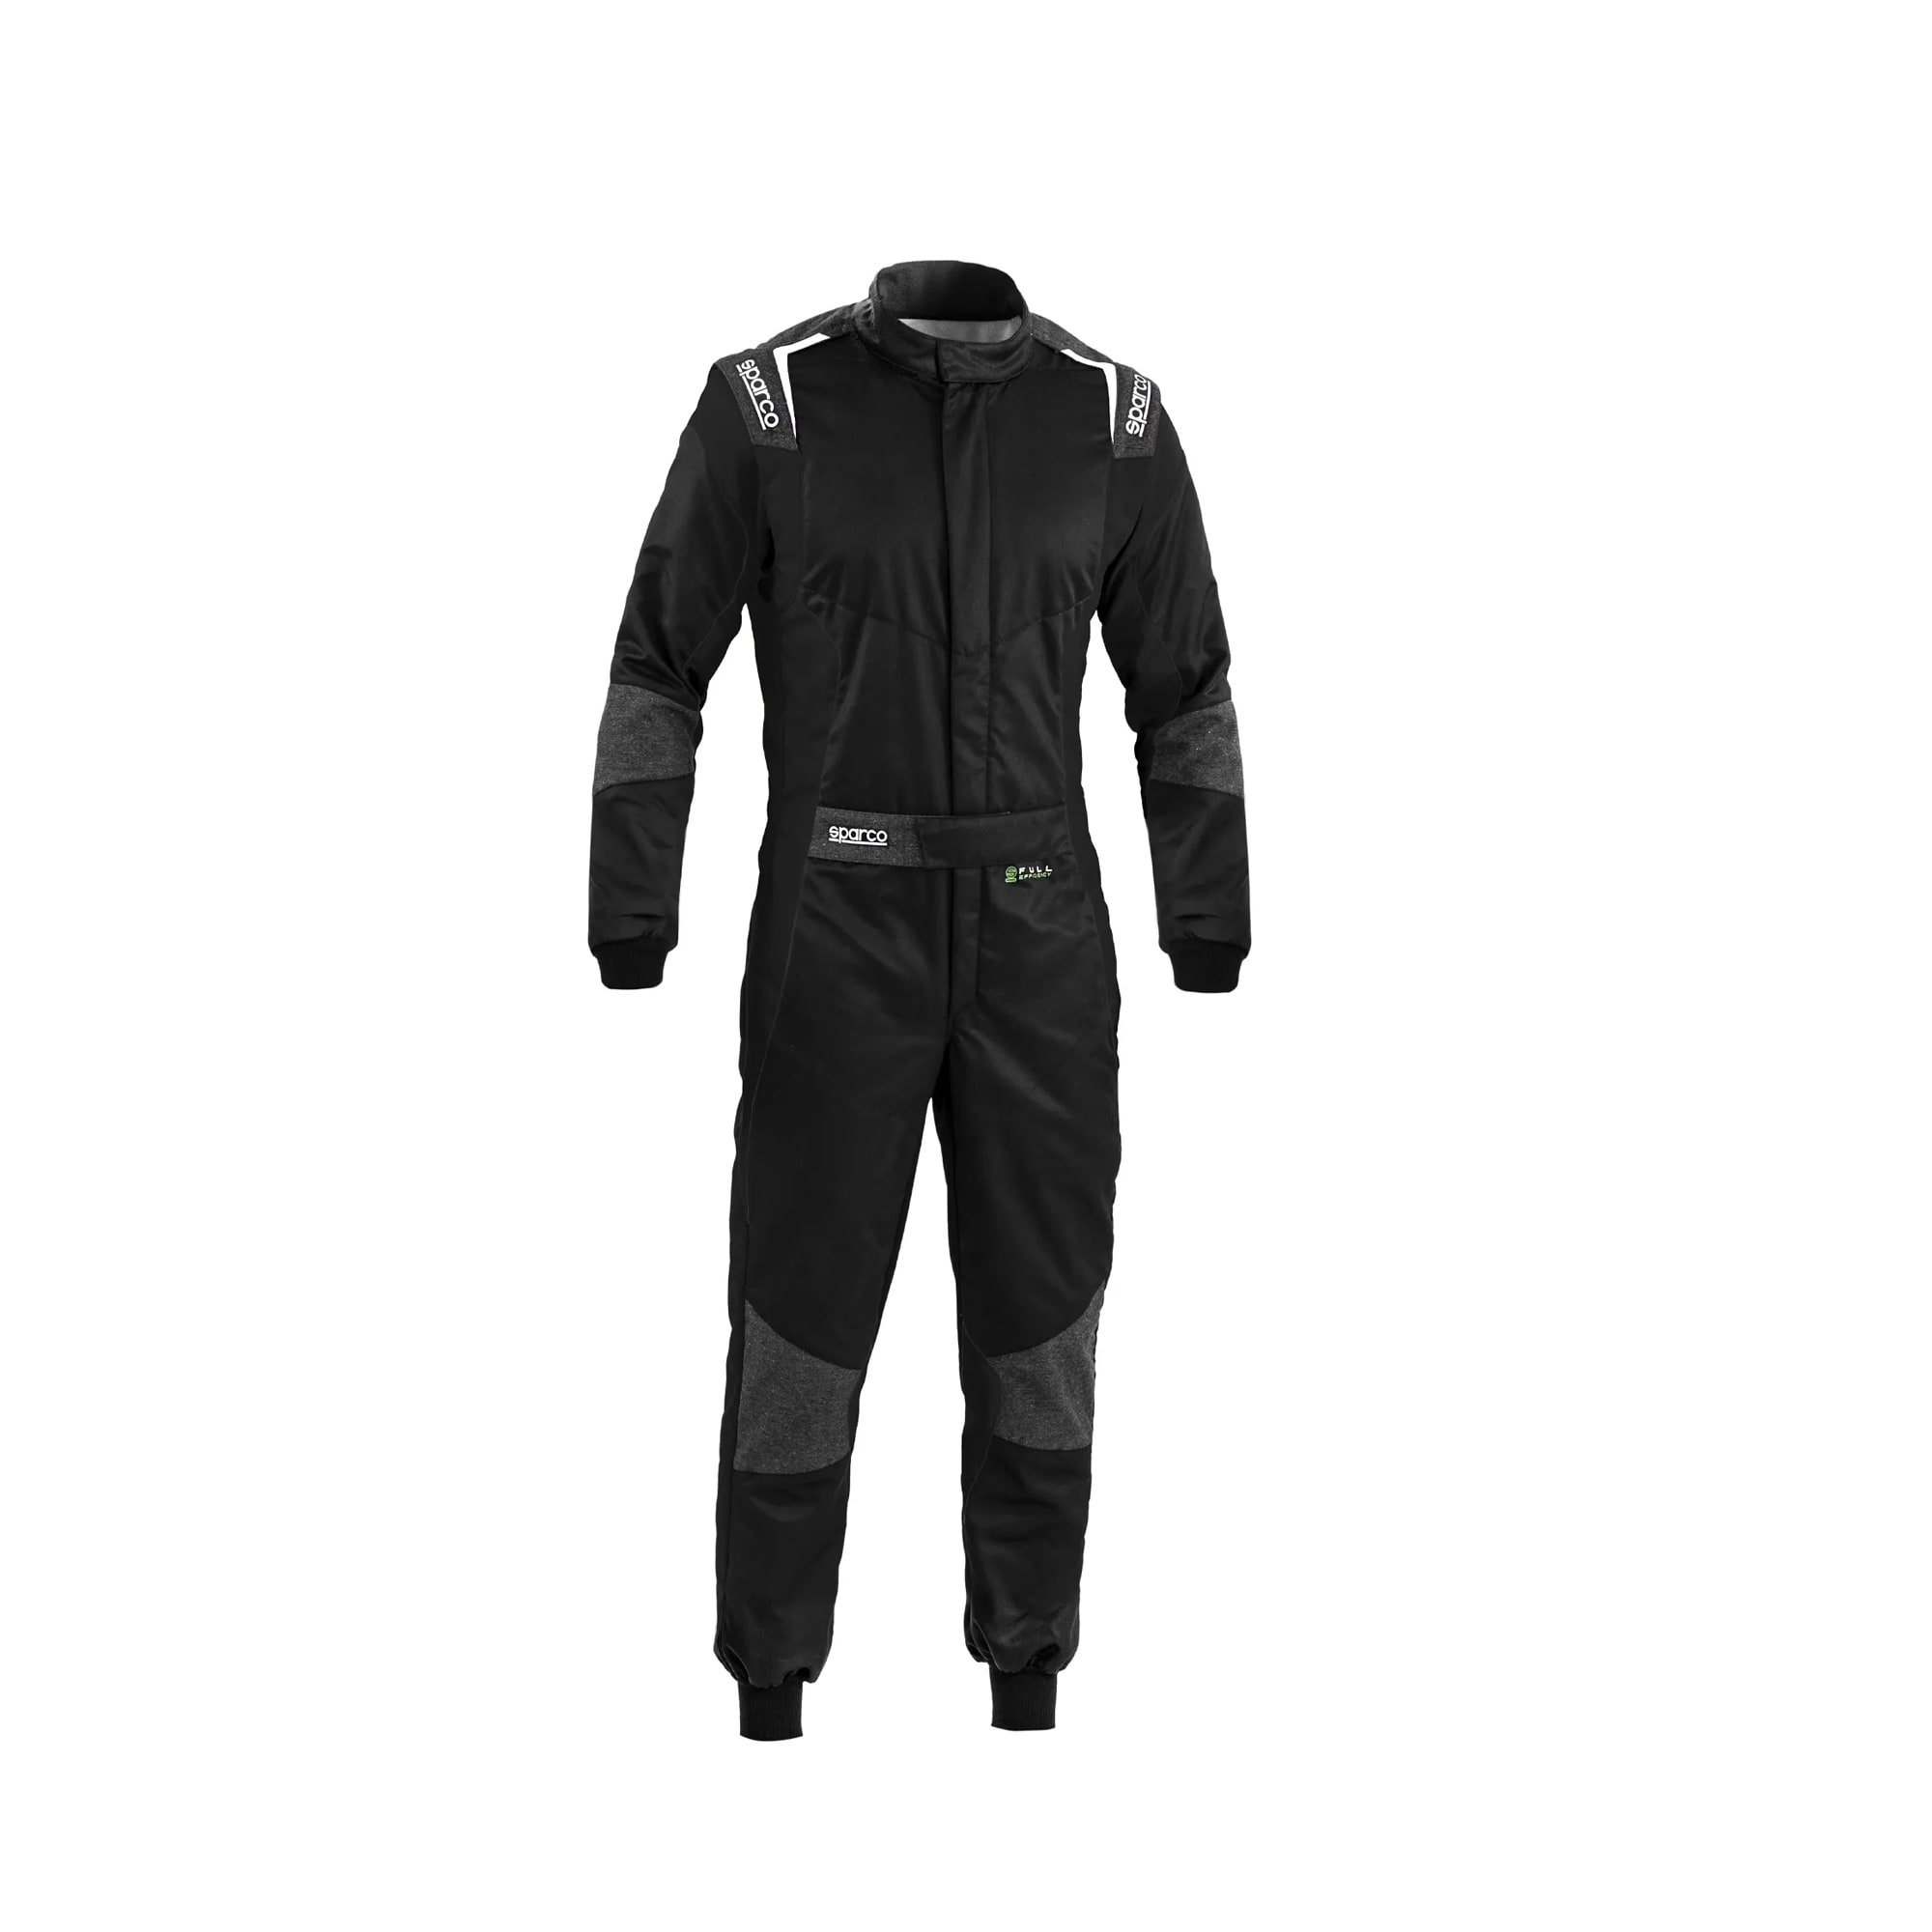 Racing Suit Sparco Futura R579 Black